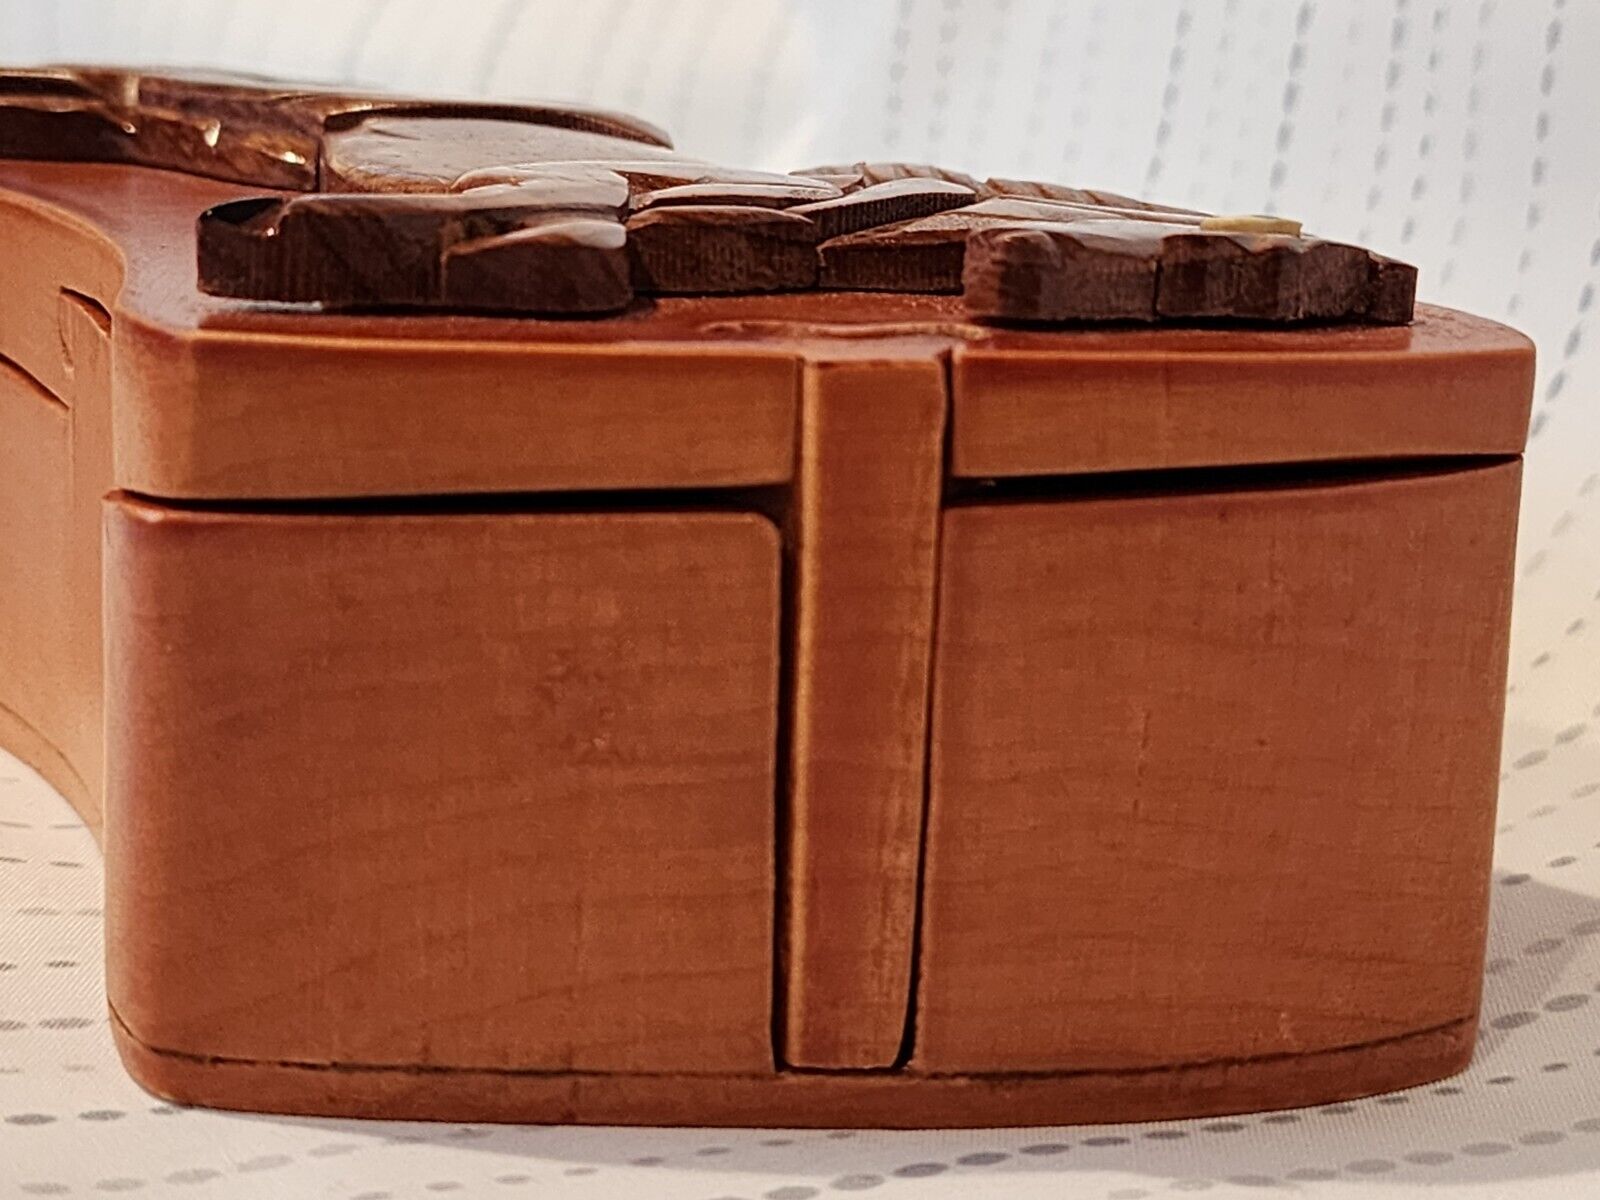 Handcrafted Intarsia Wood Art Horse Puzzle Box Jewelry Trinket Box Collectible Без бренда - фотография #5